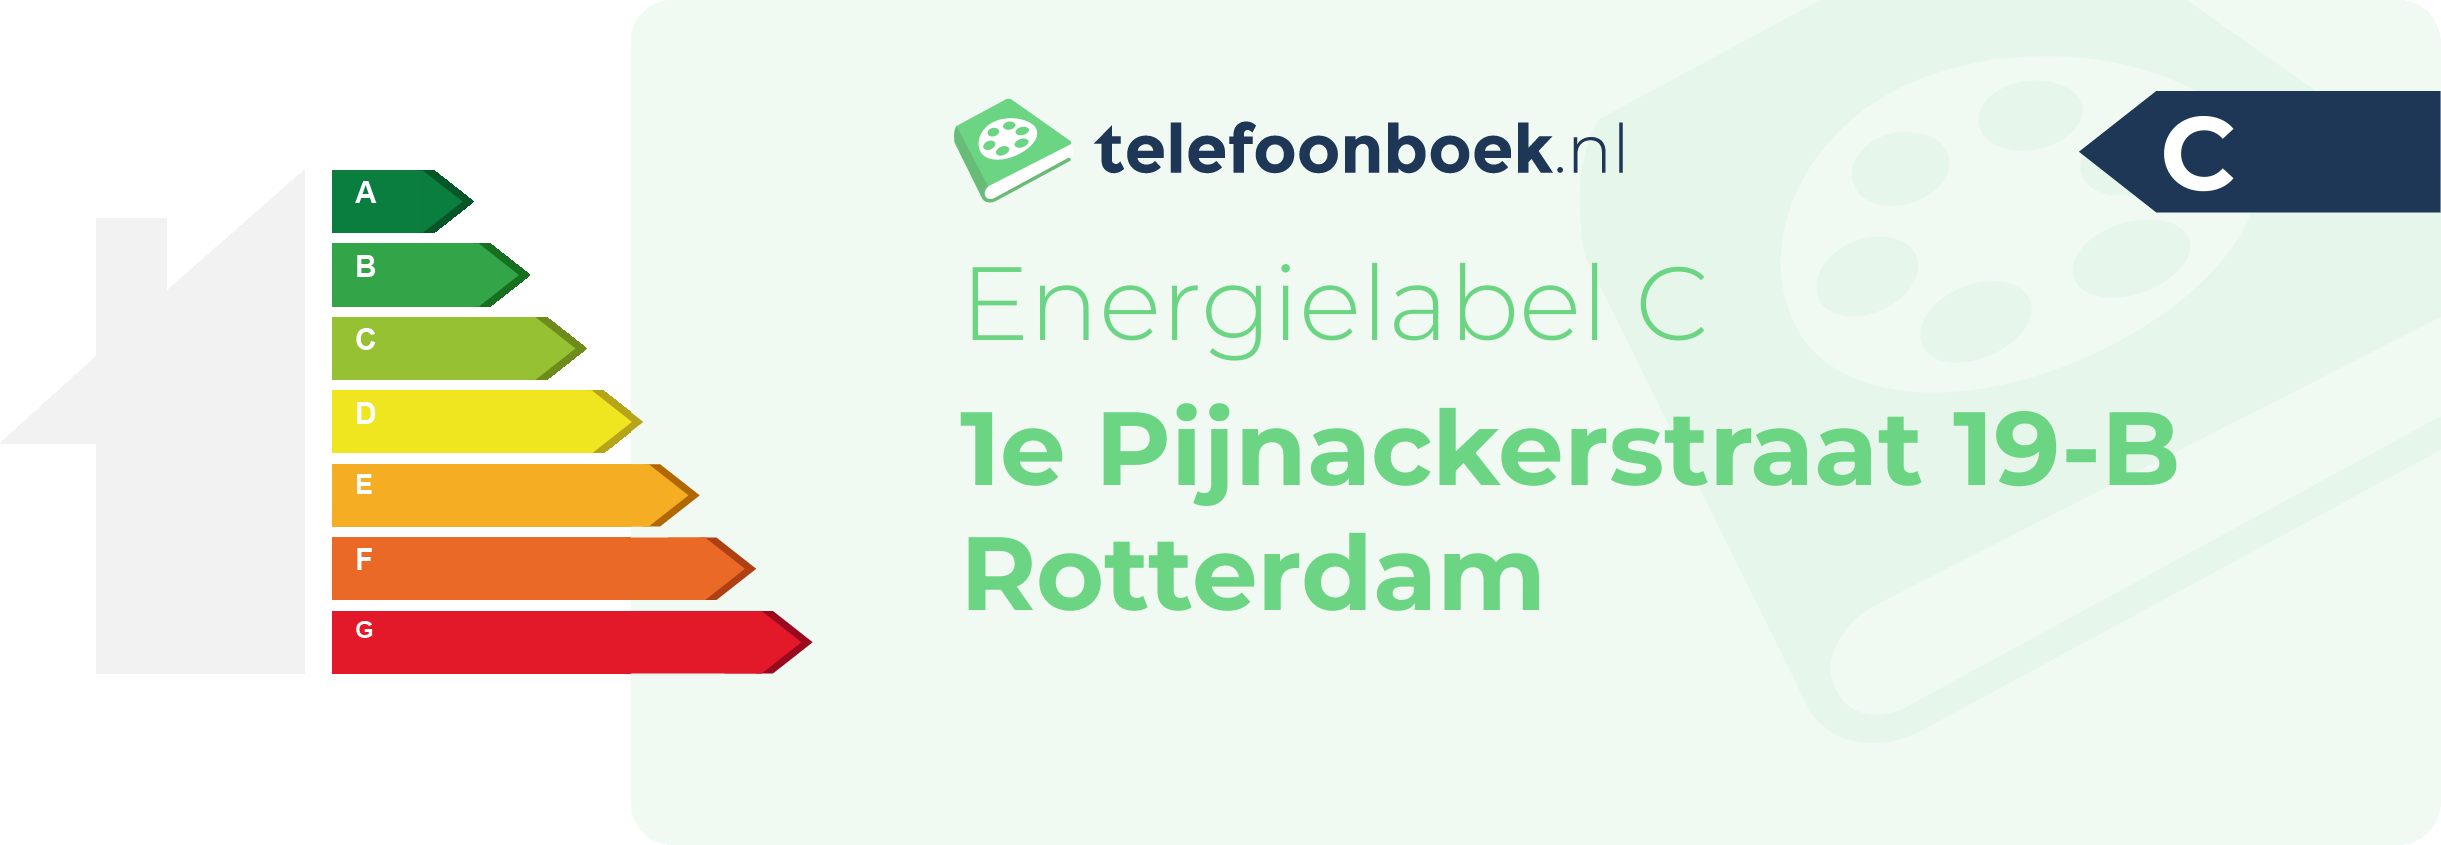 Energielabel 1e Pijnackerstraat 19-B Rotterdam